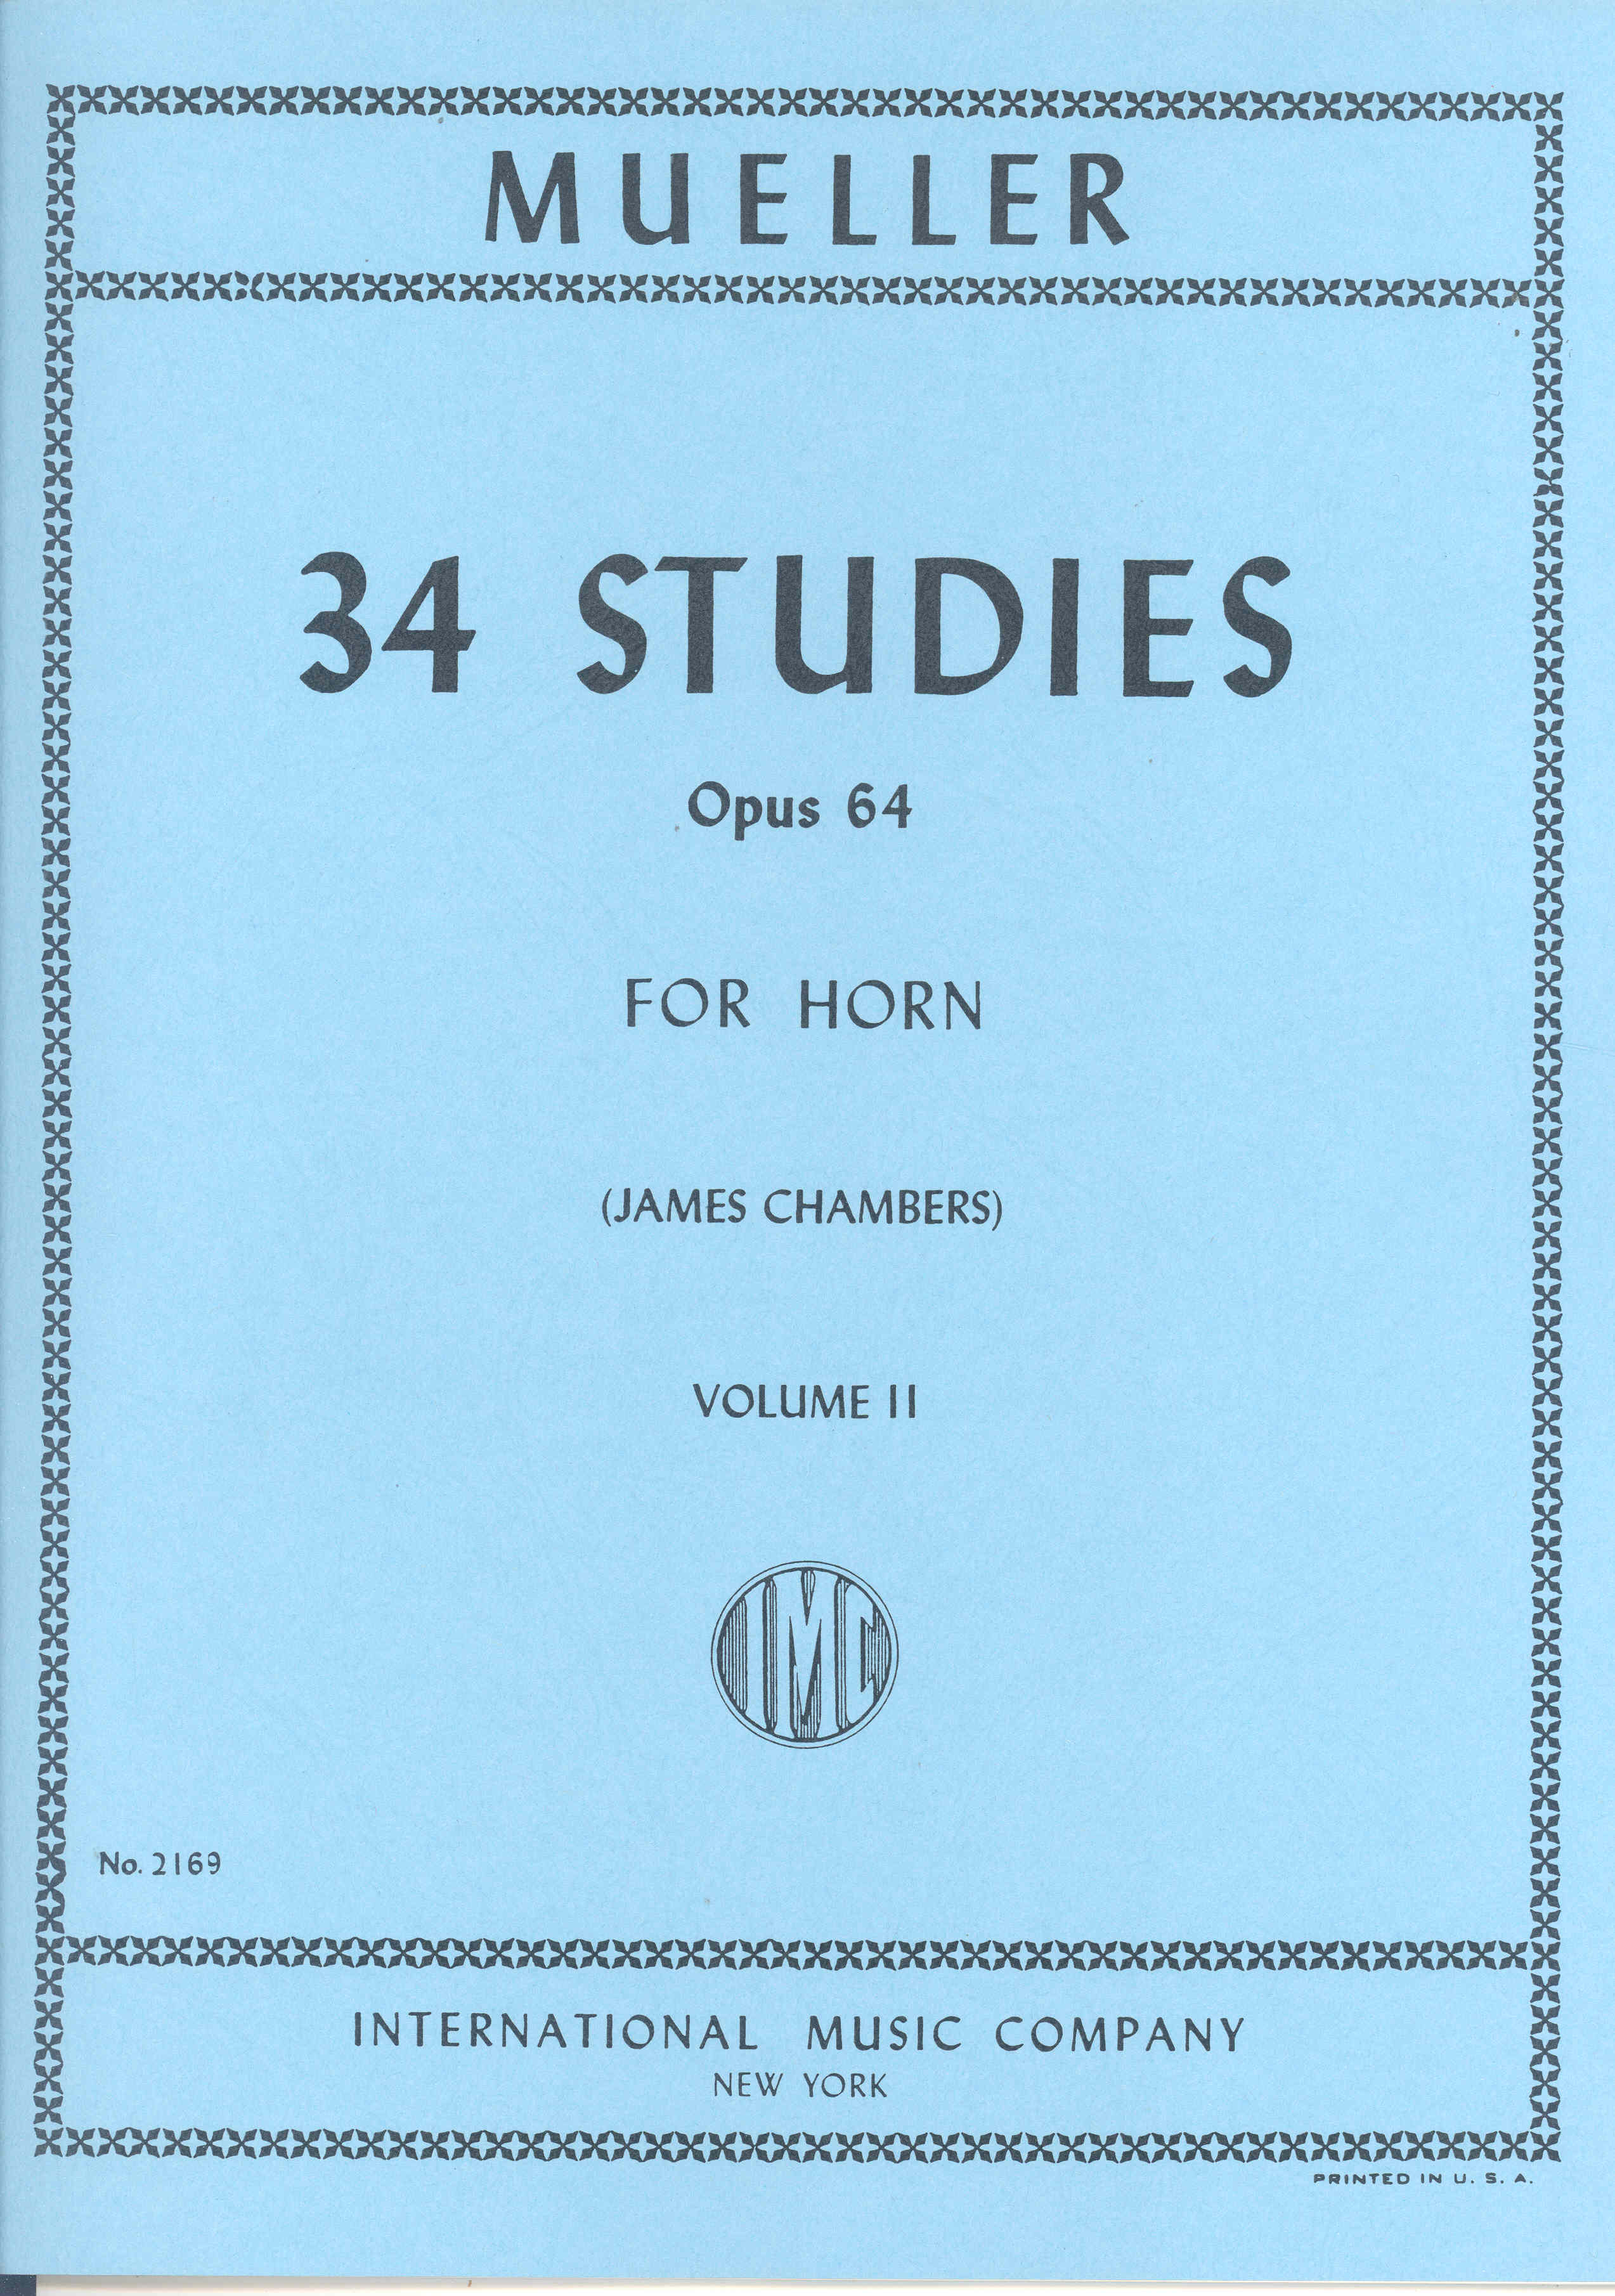 Mueller 34 Studies Op64 Vol 2 Chambers Horn Sheet Music Songbook